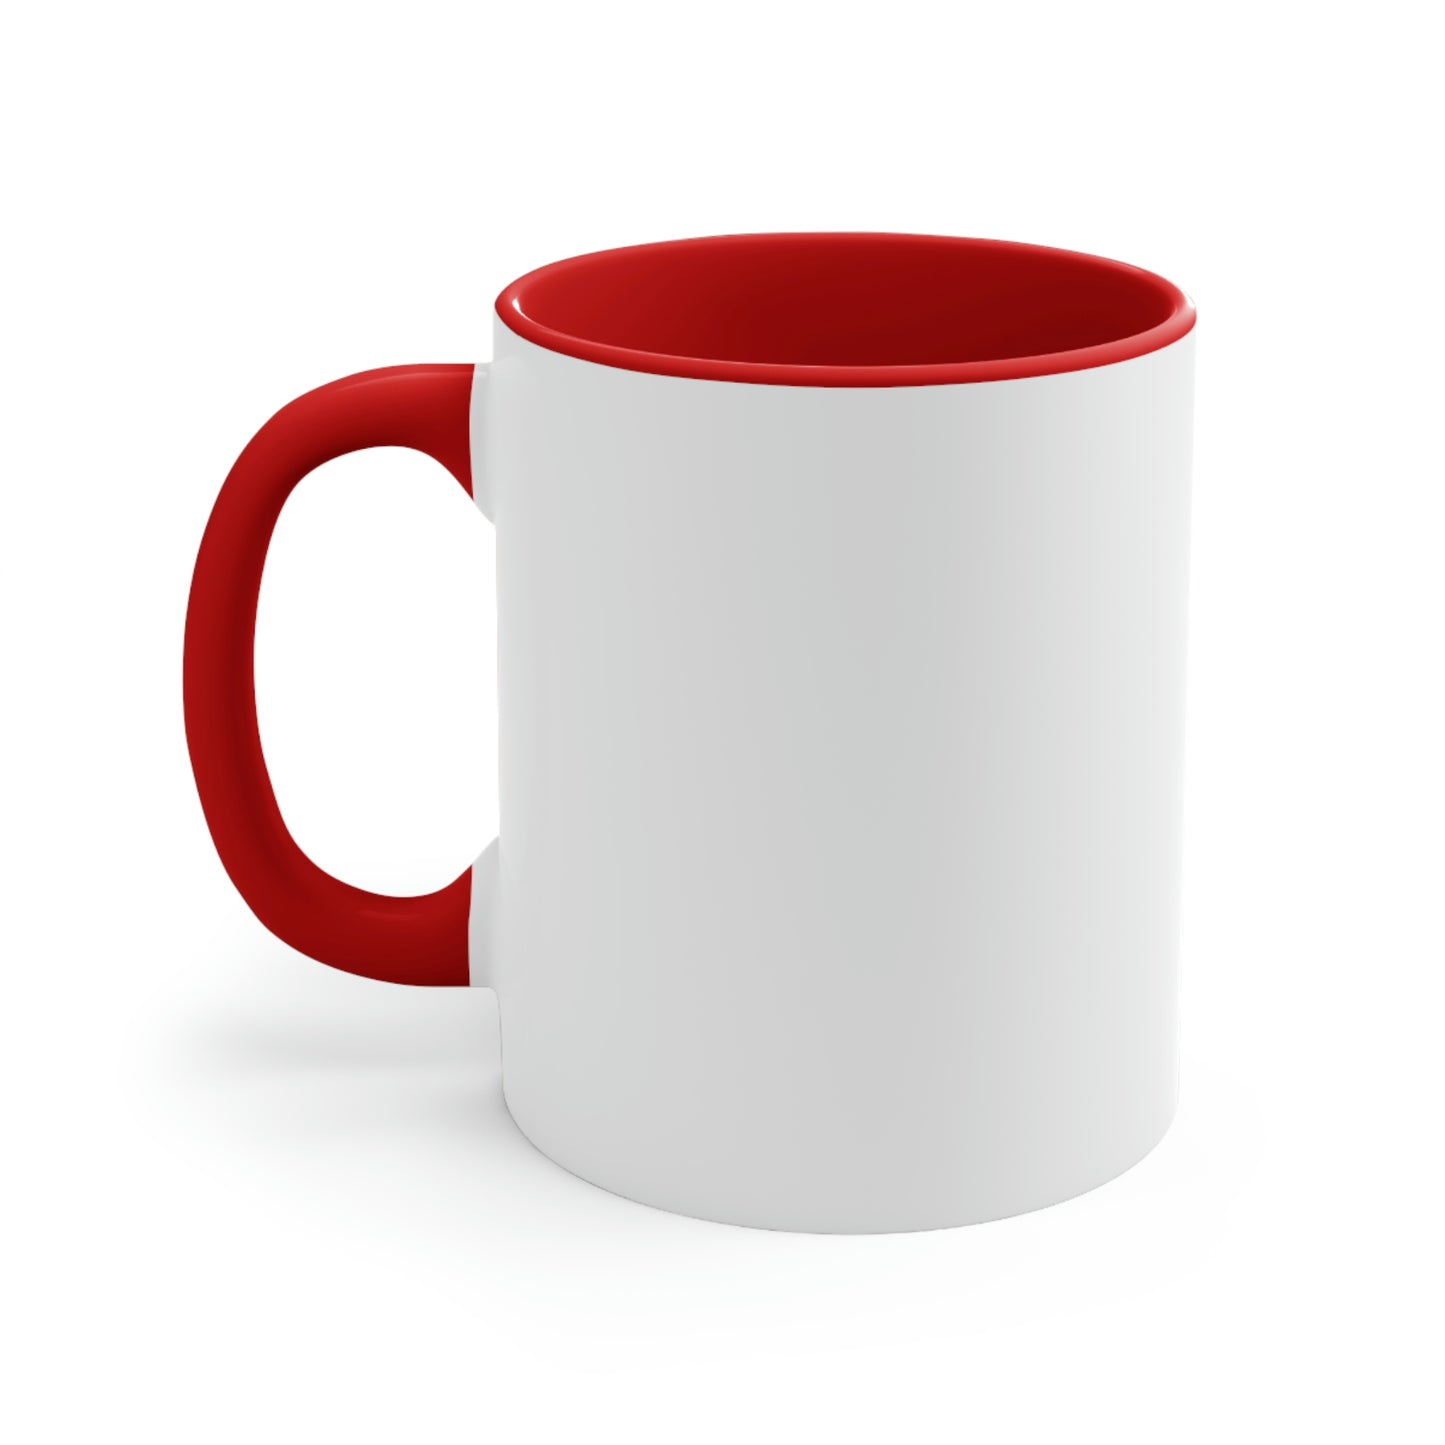 Hikin' Sammie Coffee Mug, 11 oz